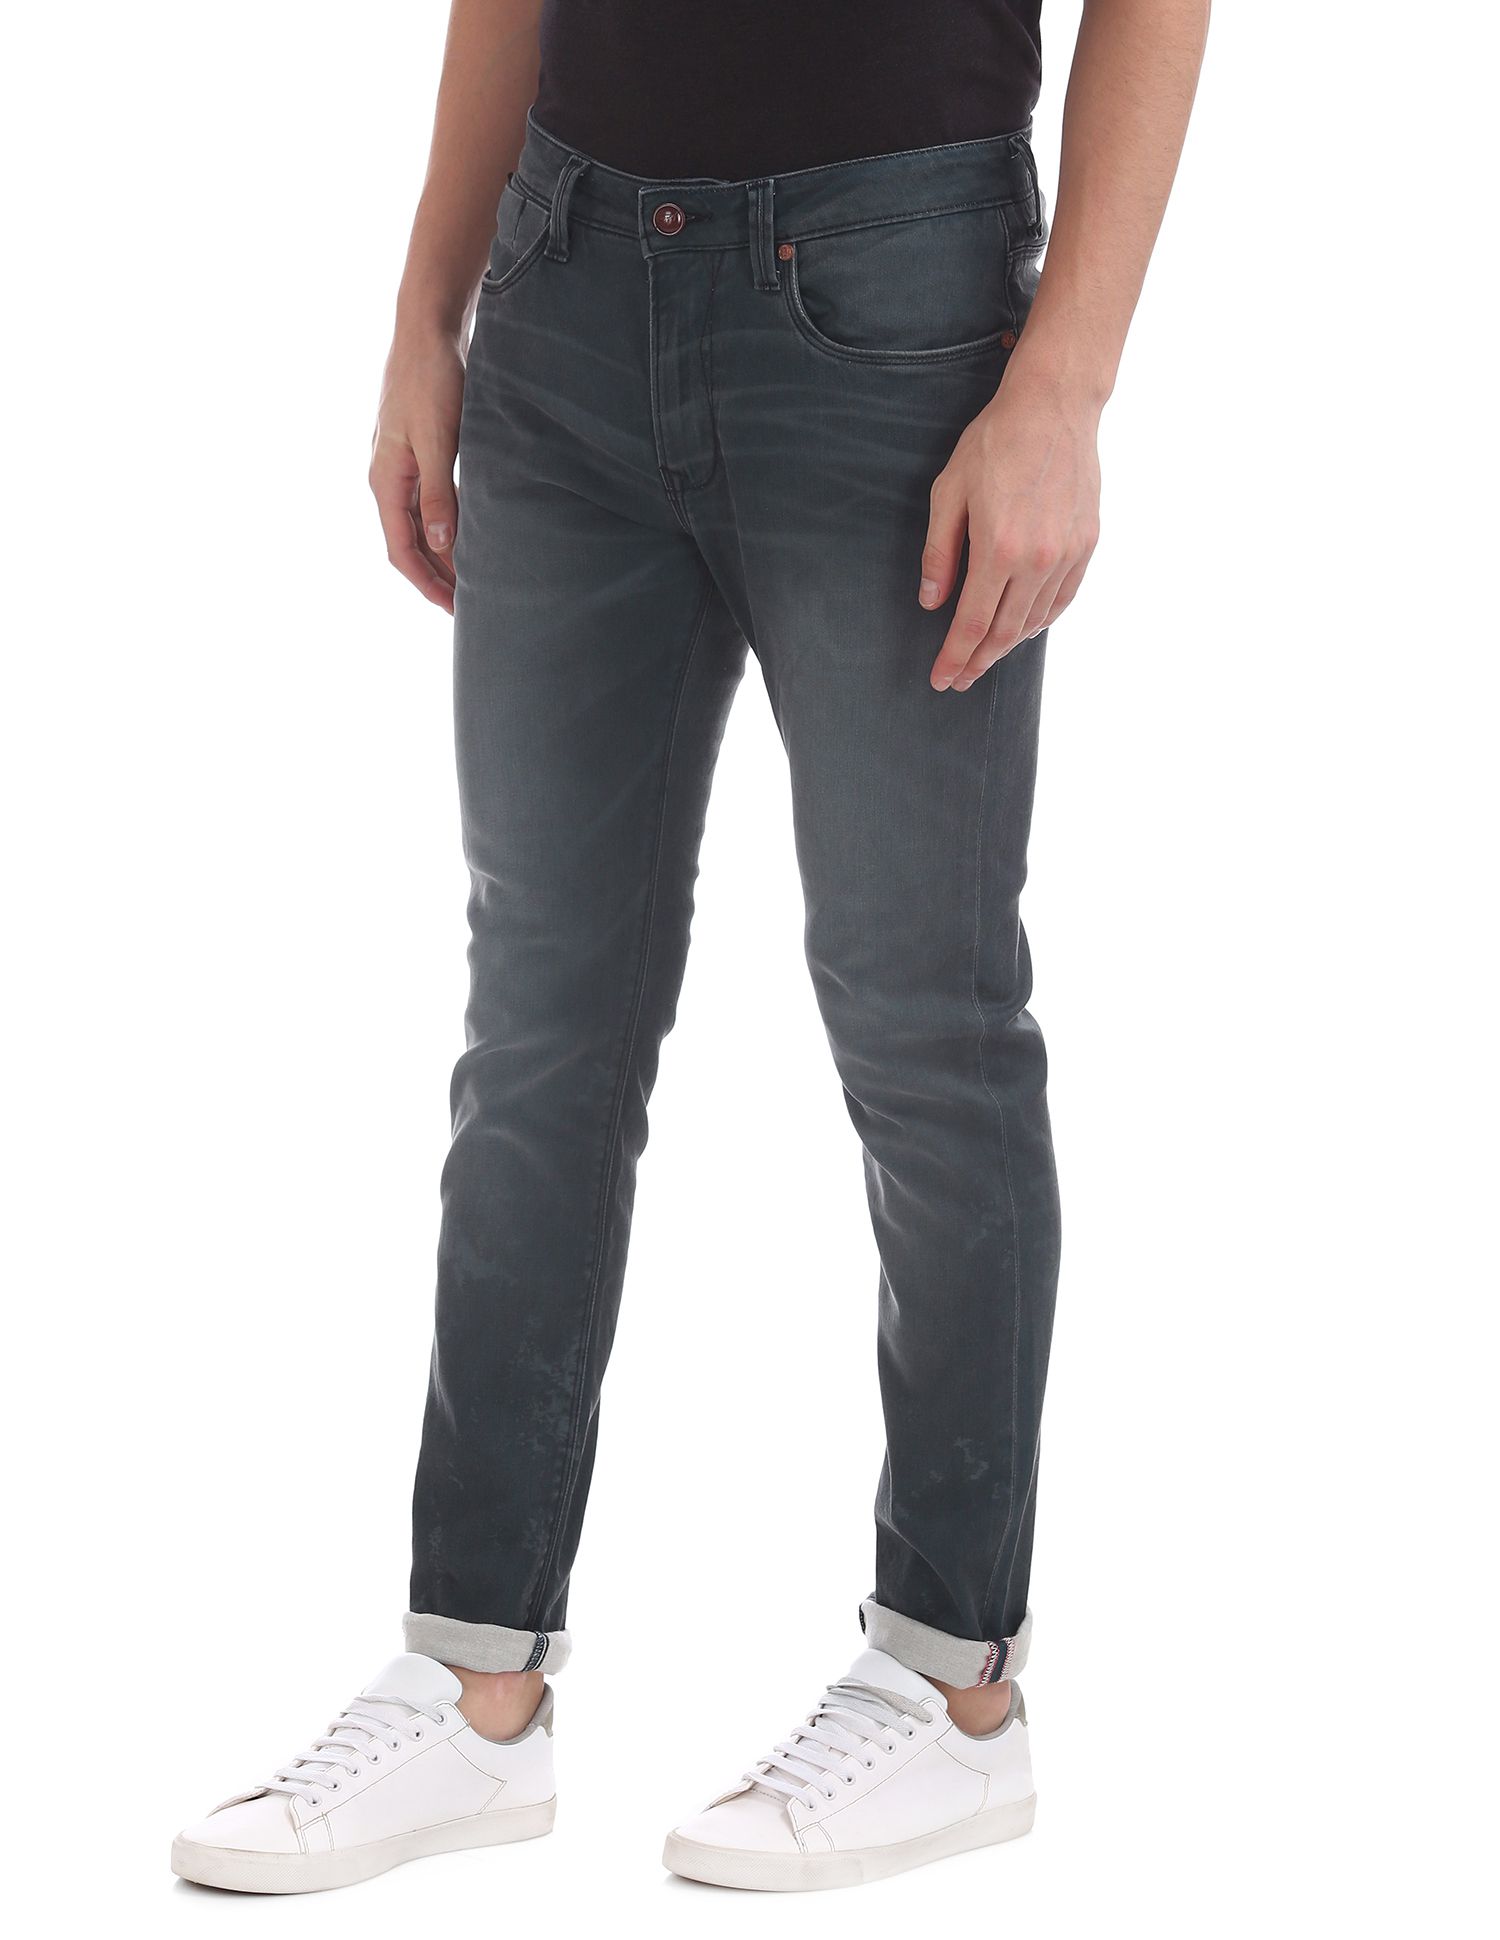 Ed Hardy Grey Slim Jeans - Buy Ed Hardy Grey Slim Jeans Online at Best ...